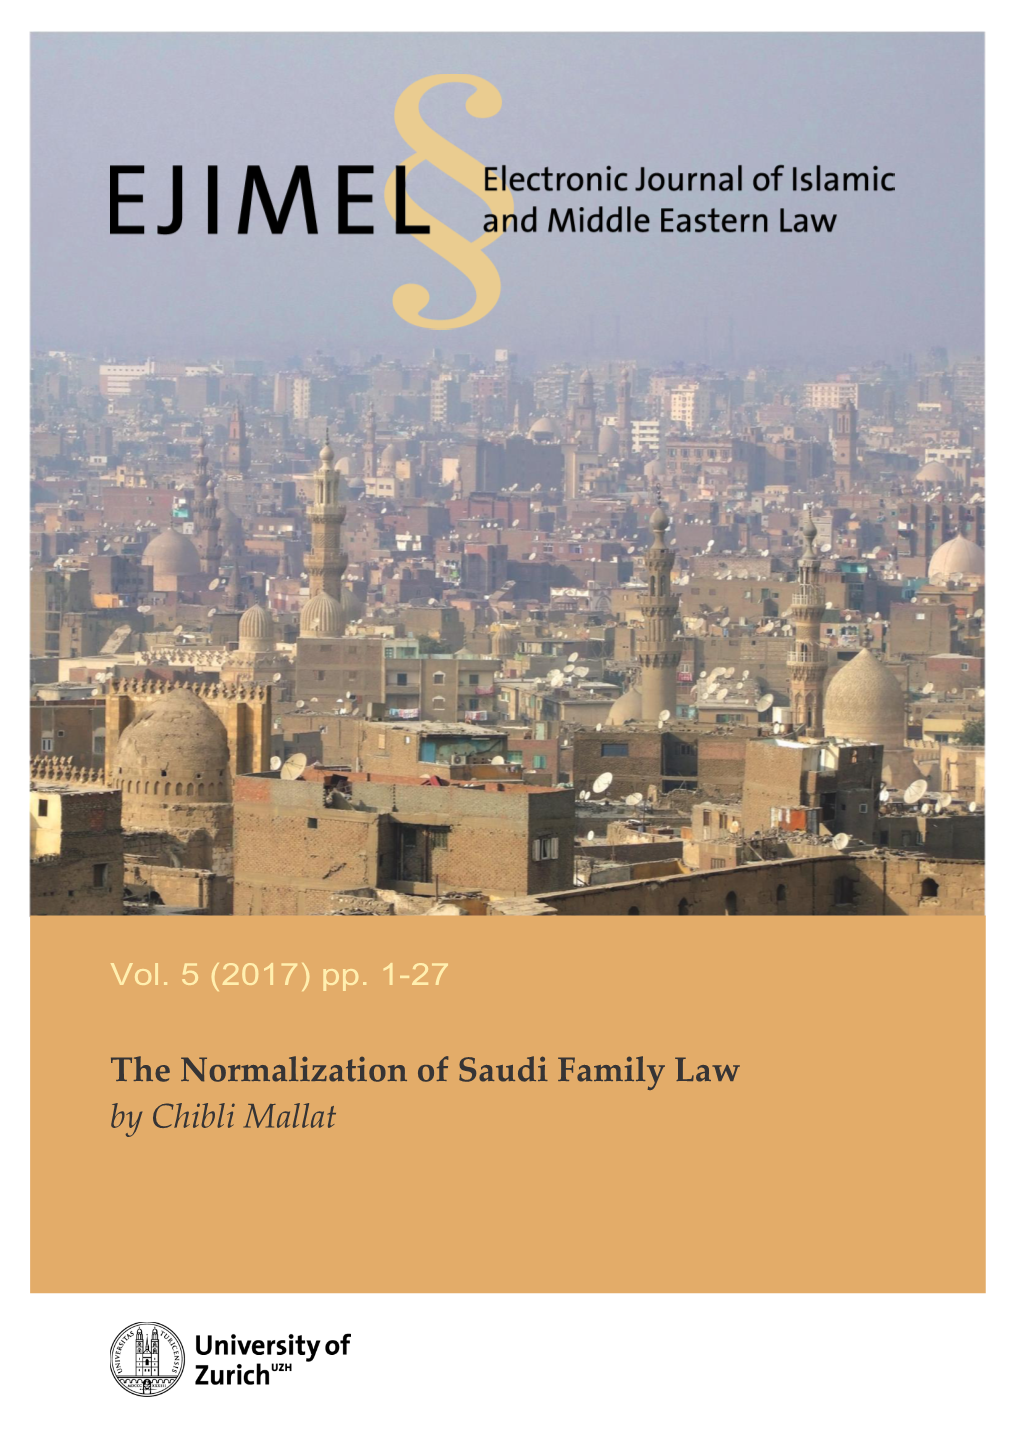 The Normalization of Saudi Family Law by Chibli Mallat